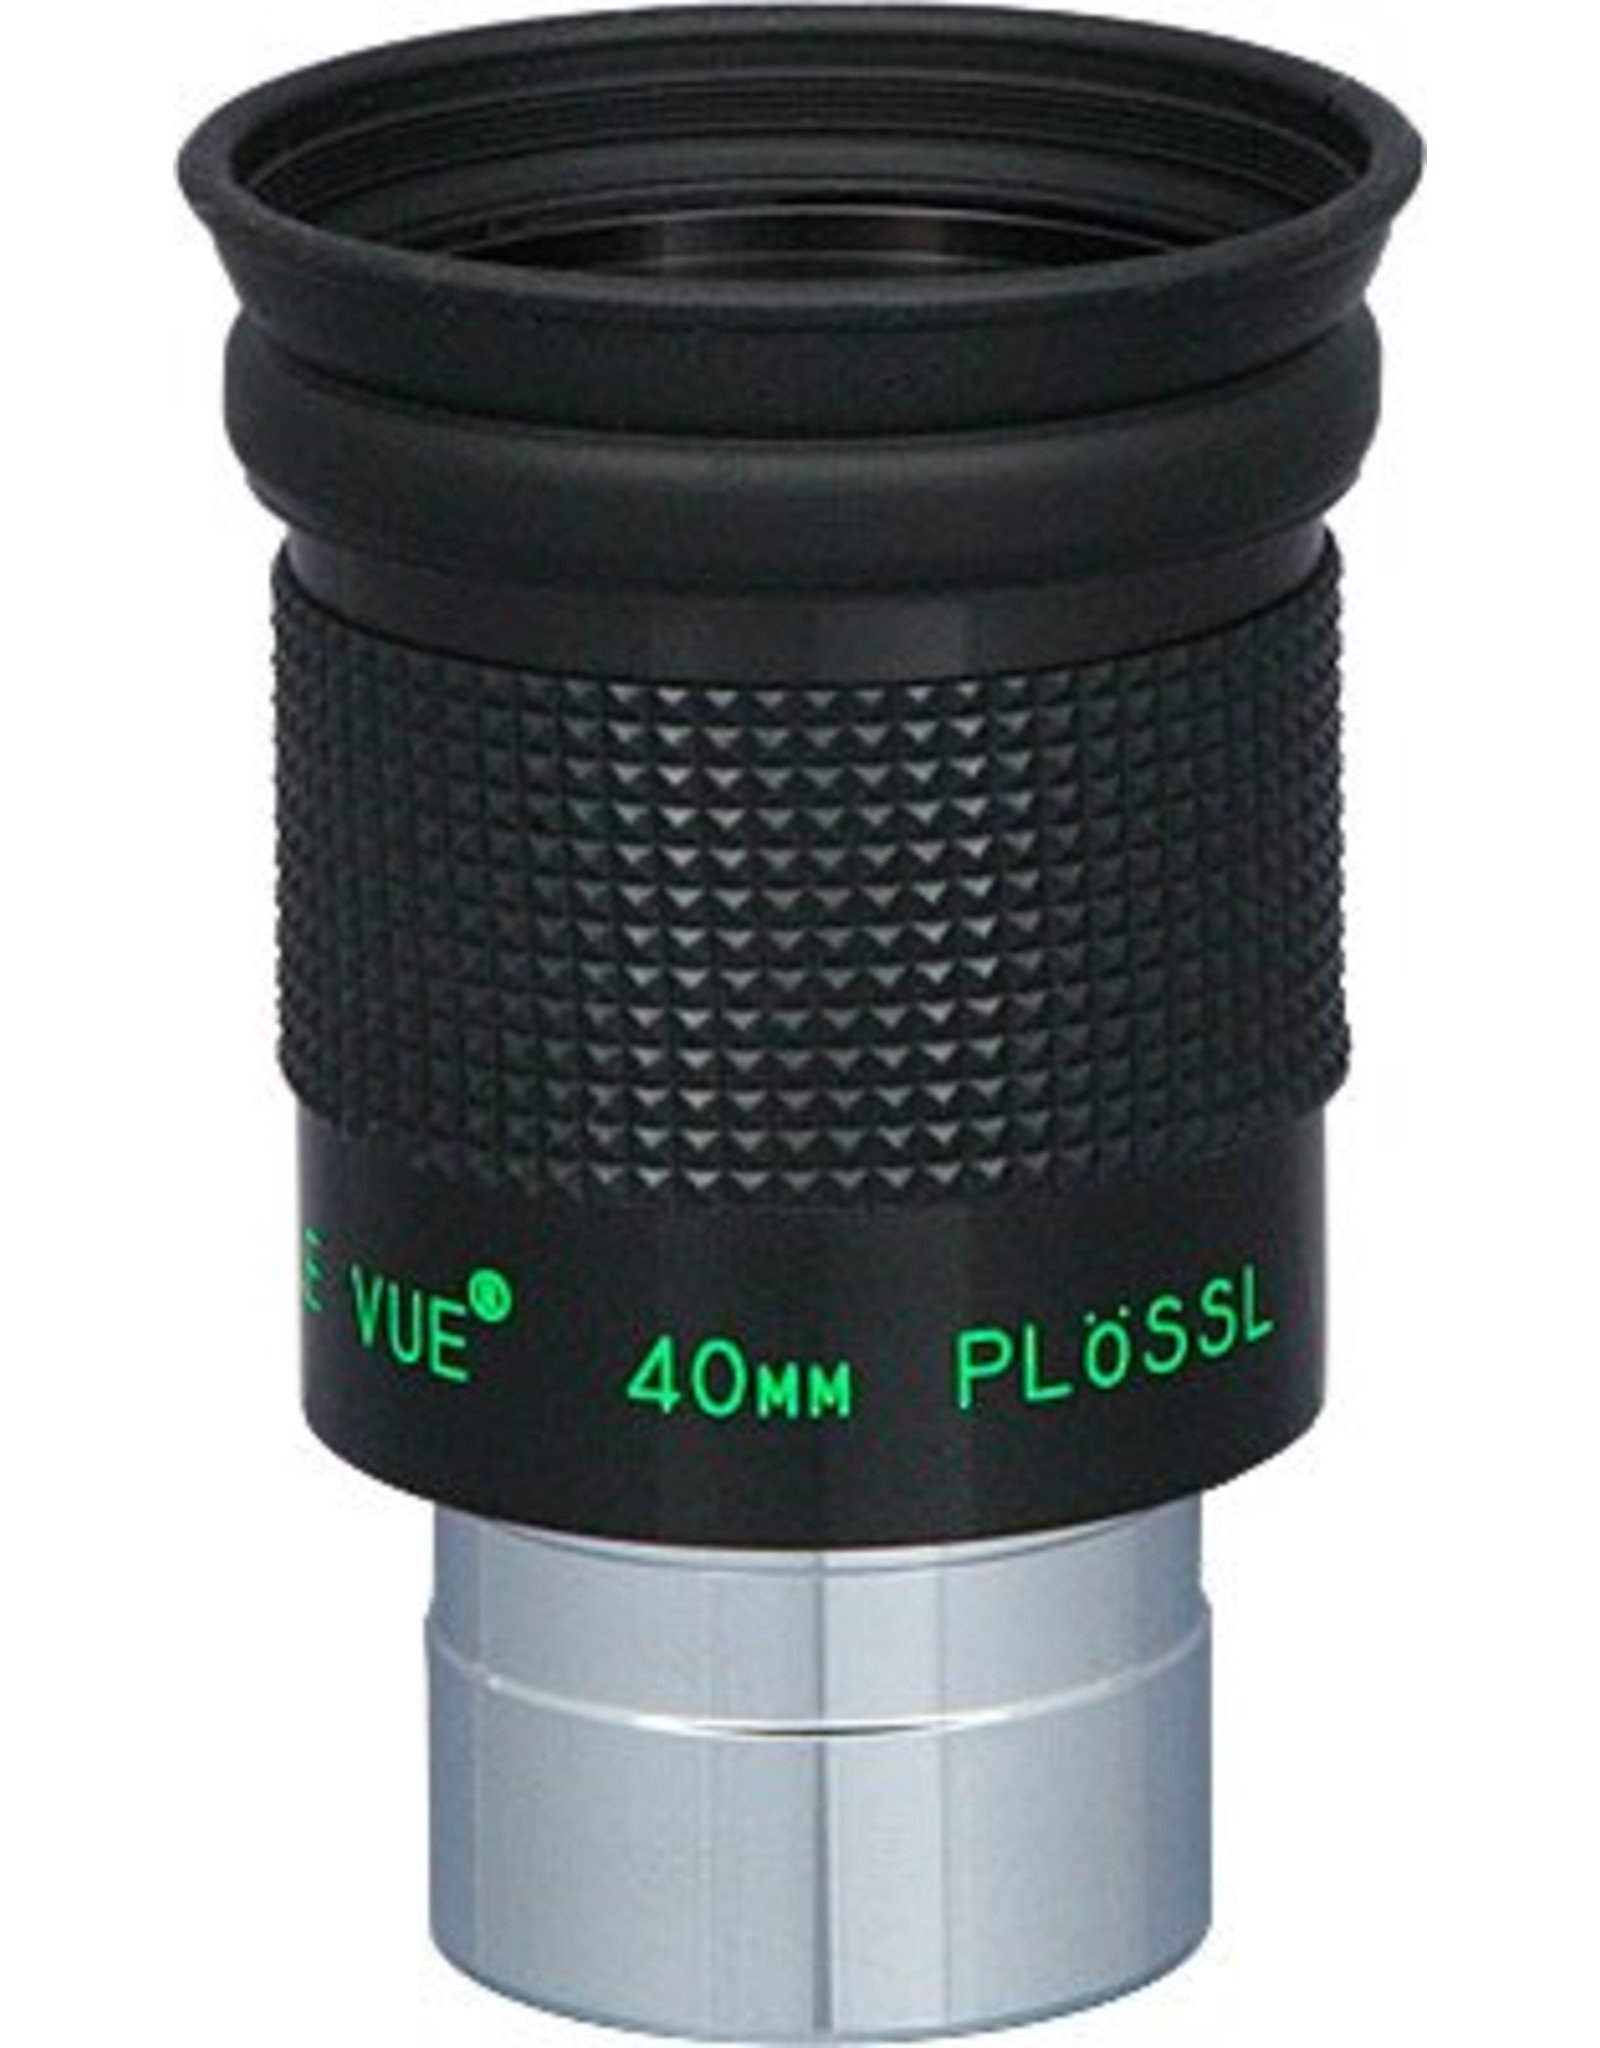 Tele Vue 40mm Plossl Eyepiece - 1.25